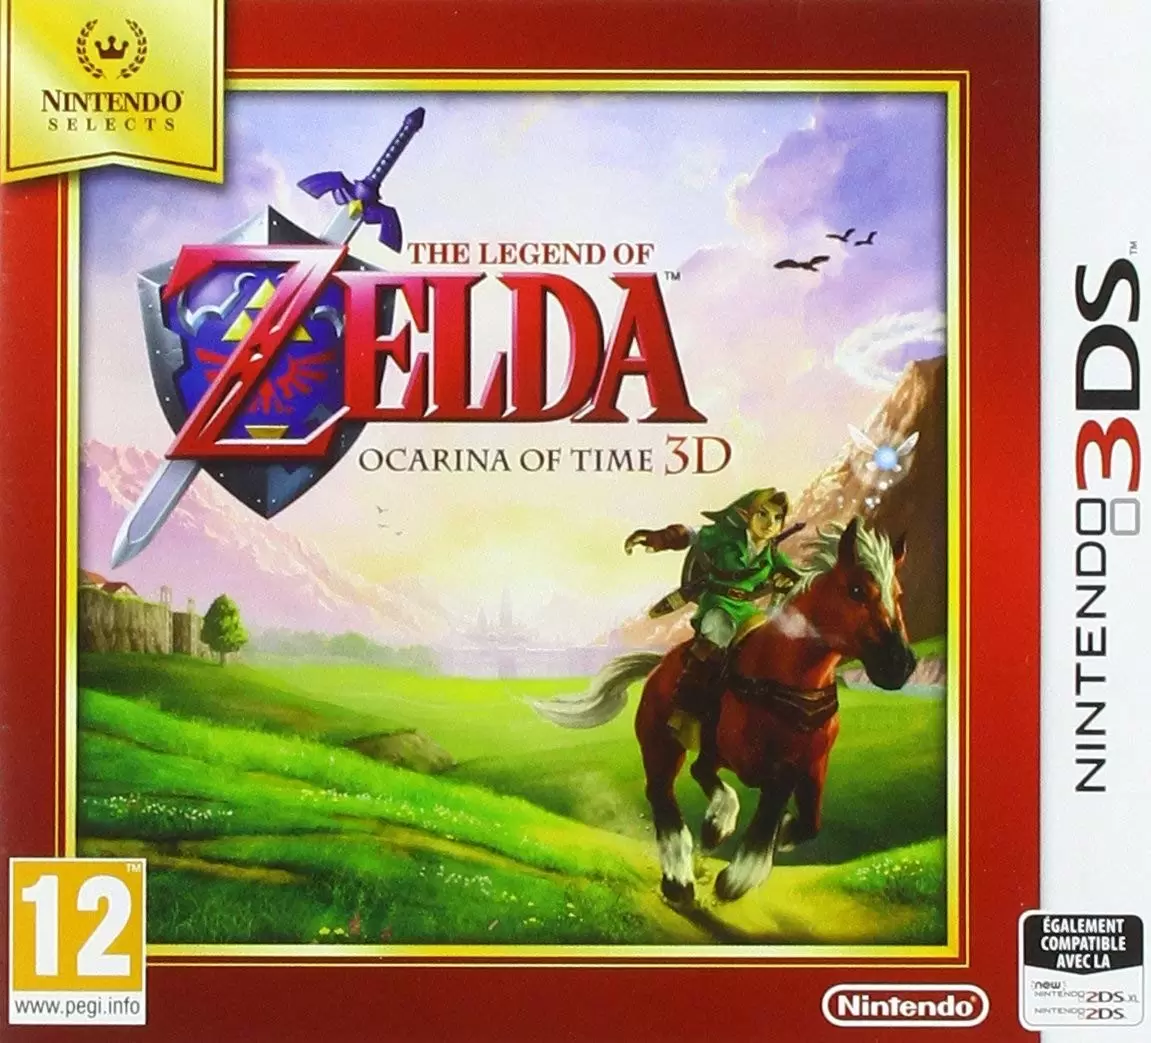 Nintendo 2DS / 3DS Games - The Legend of Zelda : Ocarina of Time (Nintendo Selects)